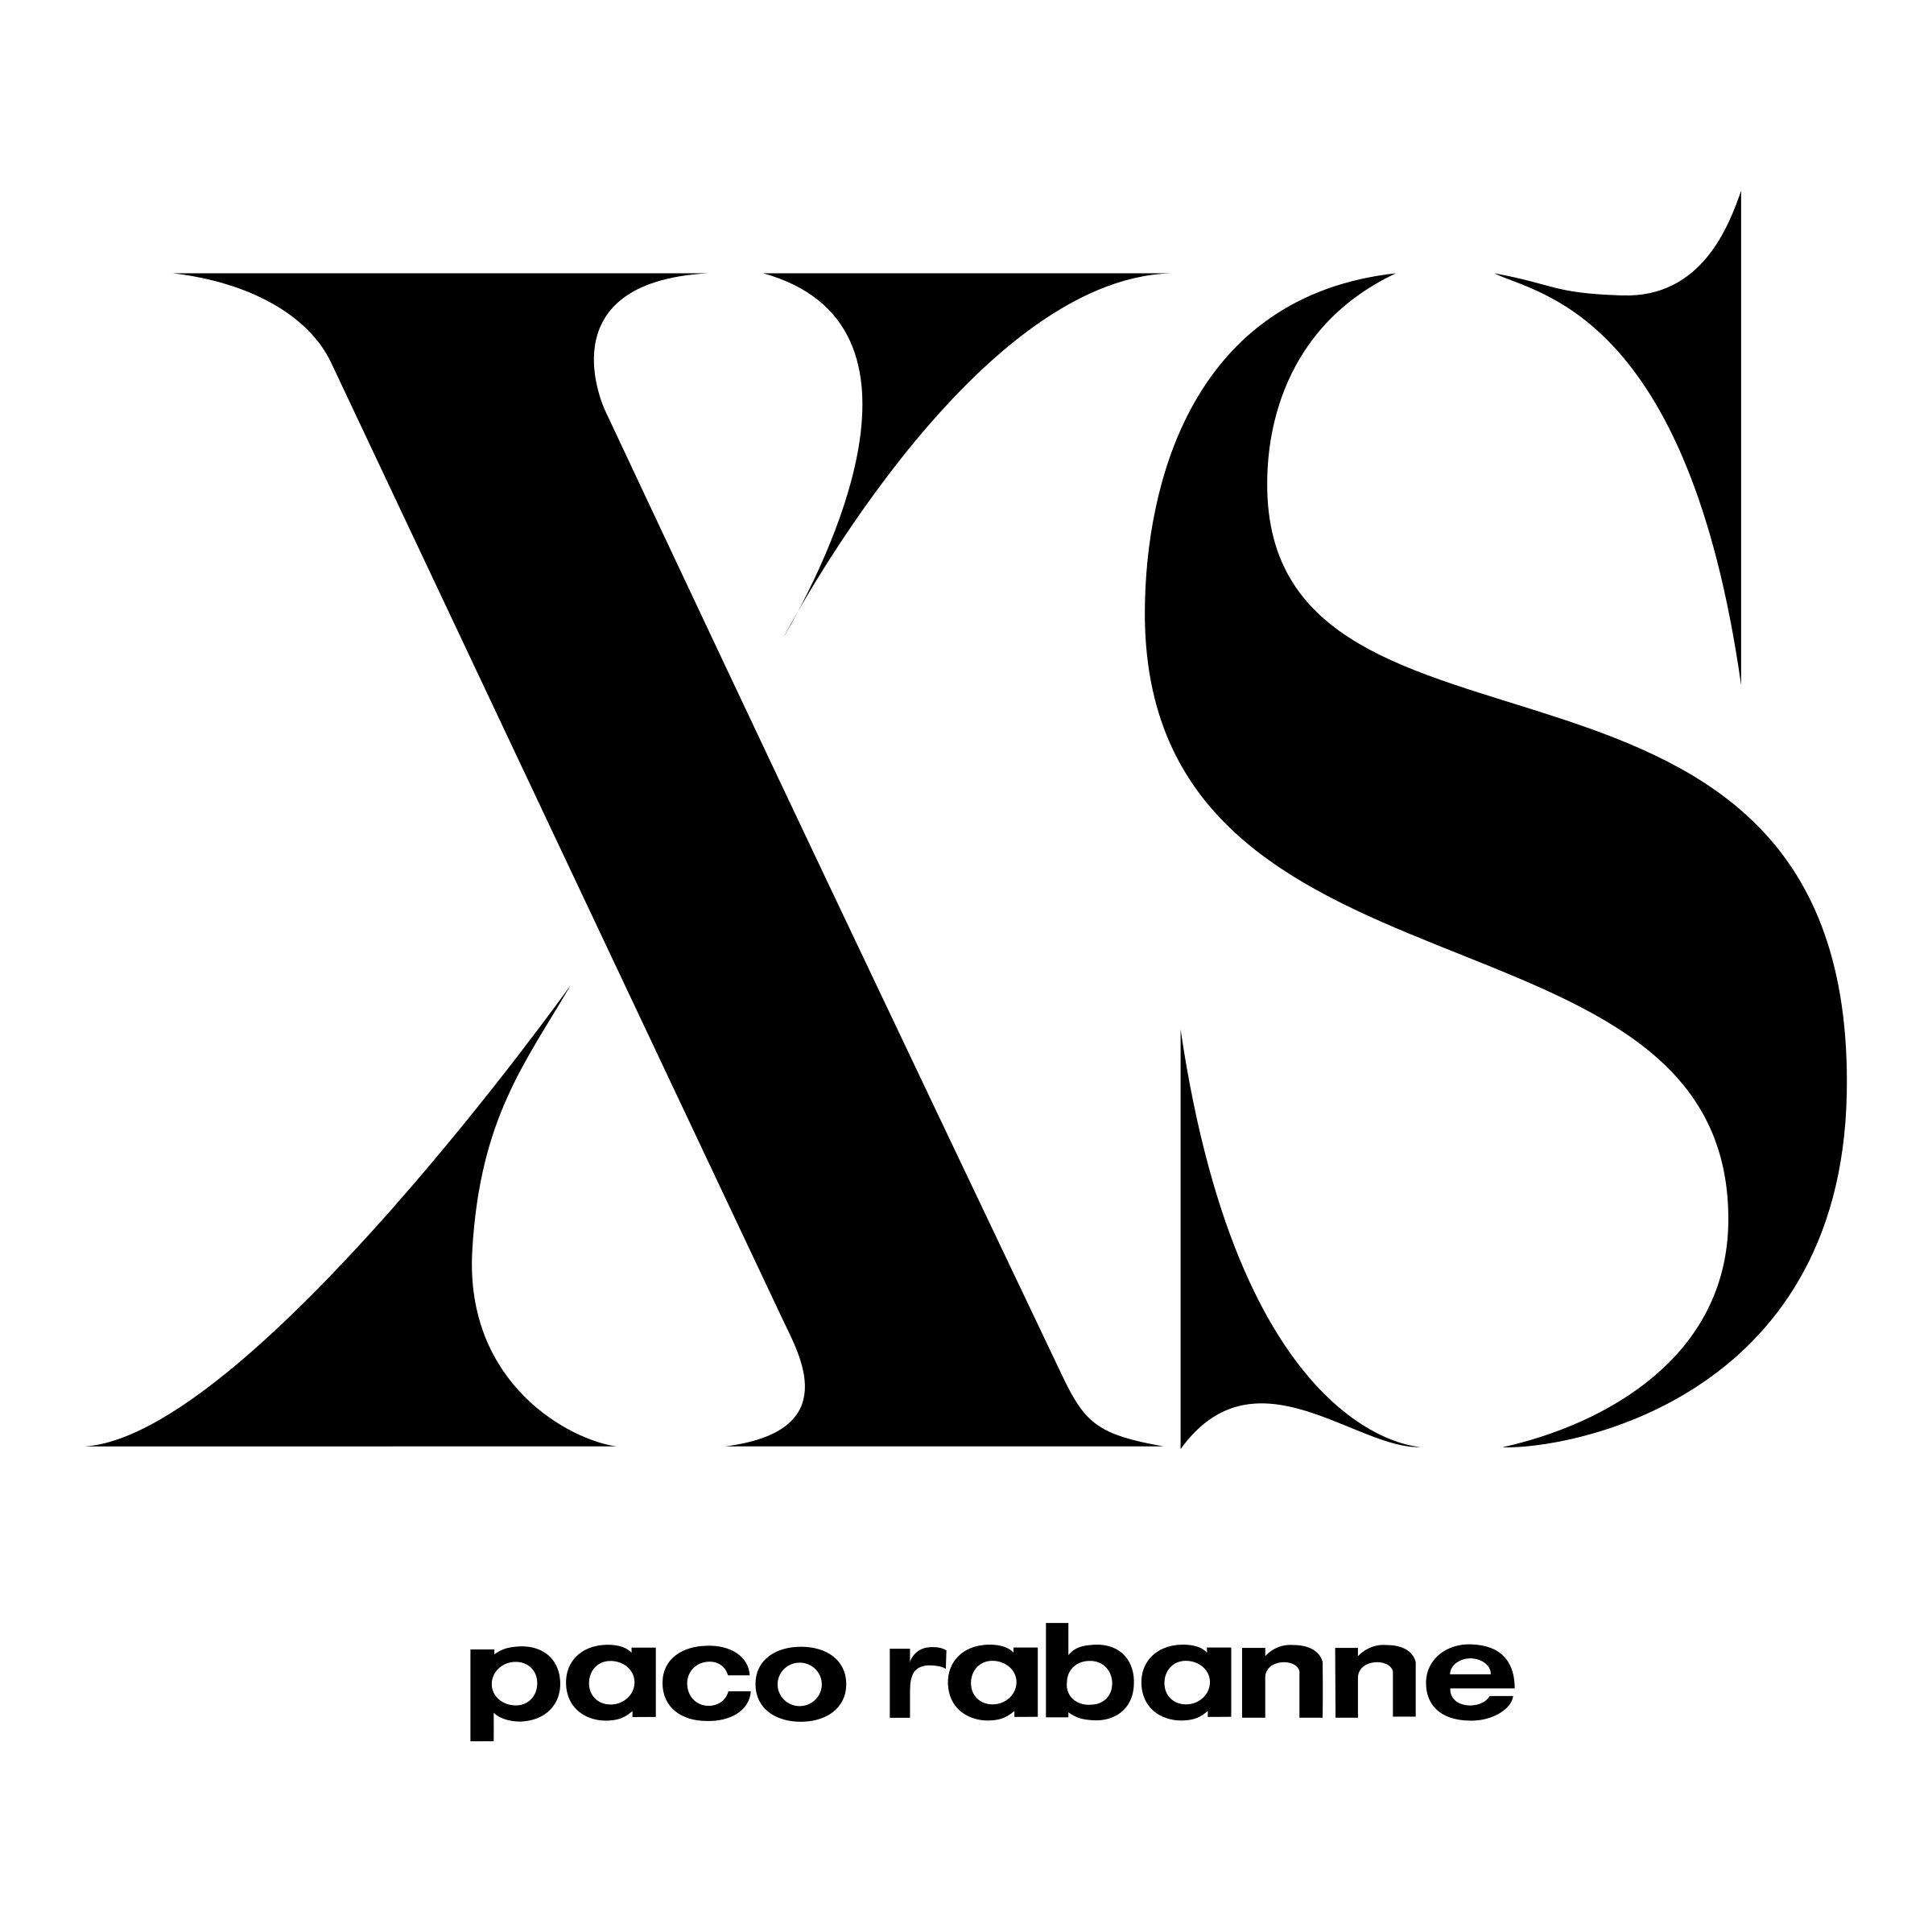 XS Logo - XS Paco Rabanne Logo PNG Transparent & SVG Vector - Freebie Supply